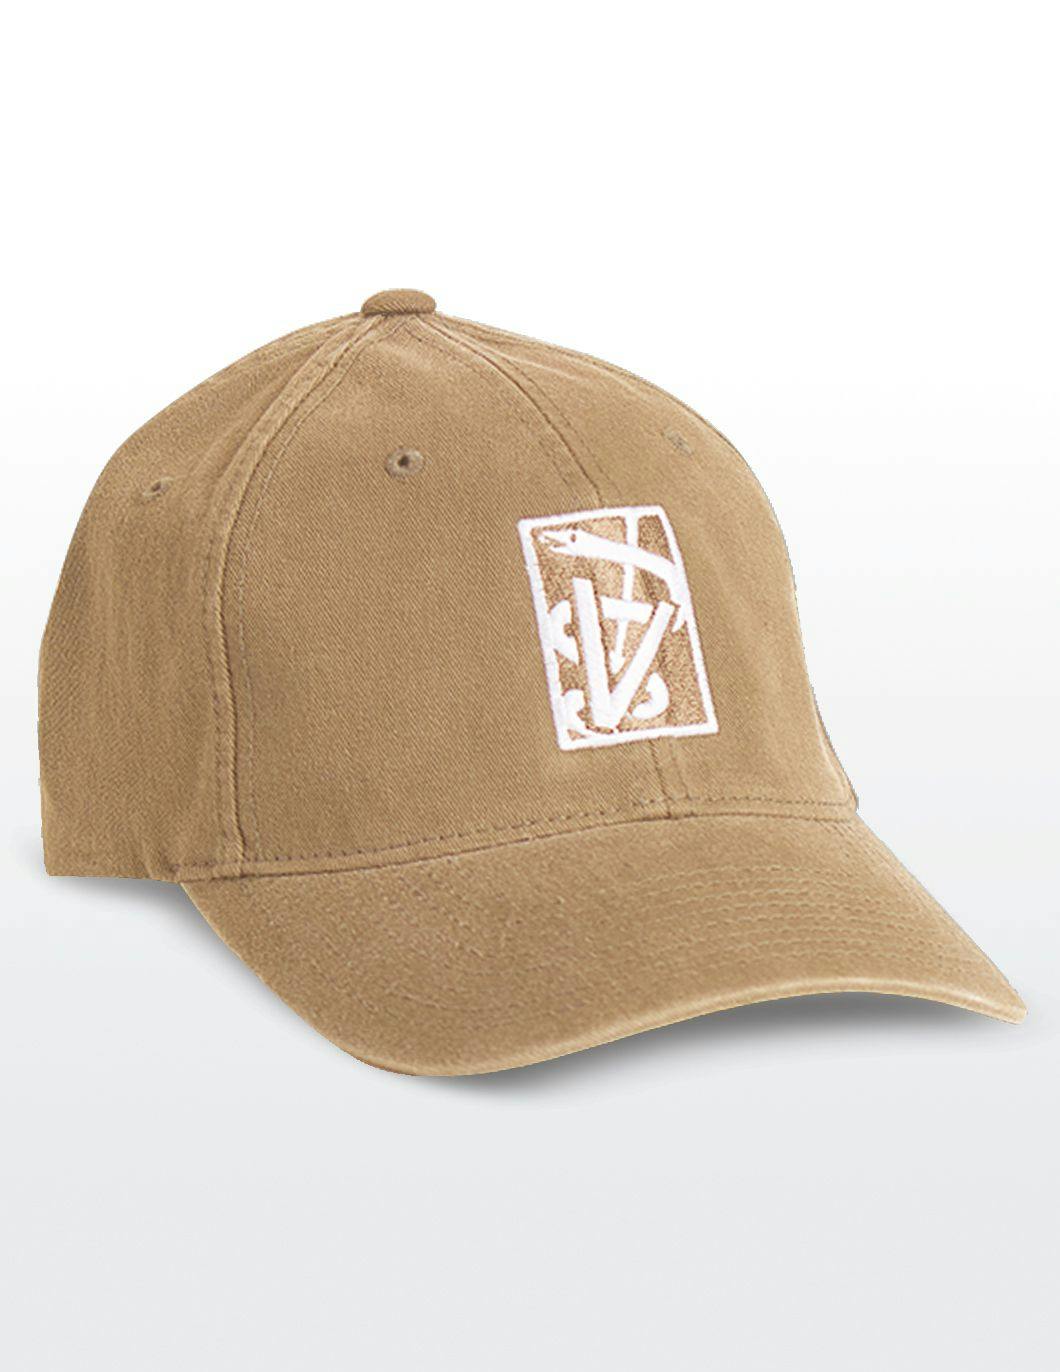 vet-emblem-distressed-hat-khaki